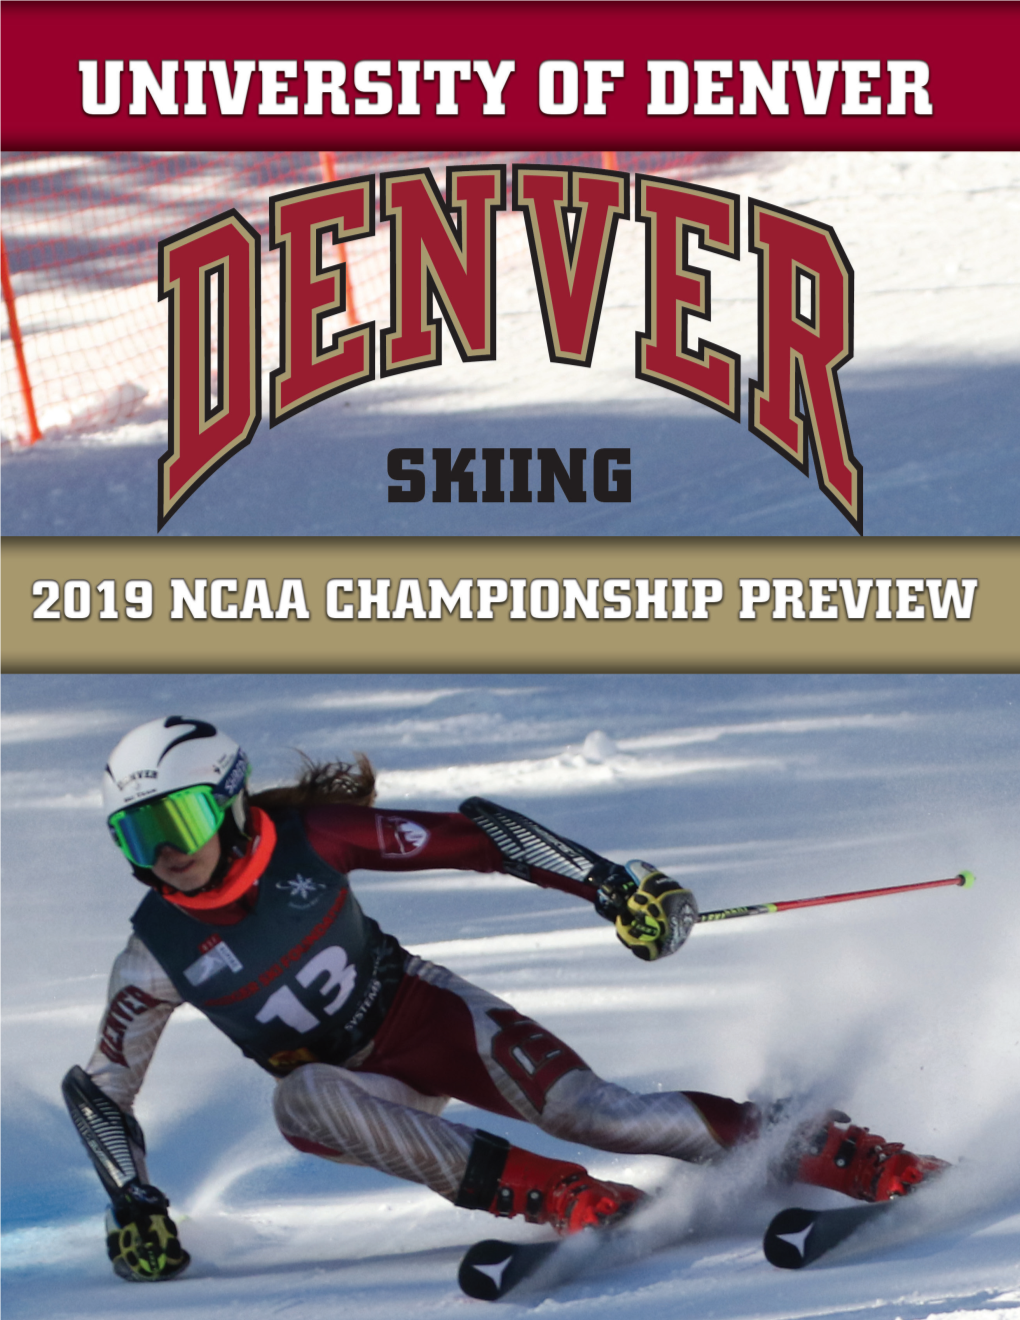 University of Denver Skiing 2019 NCAA Championships